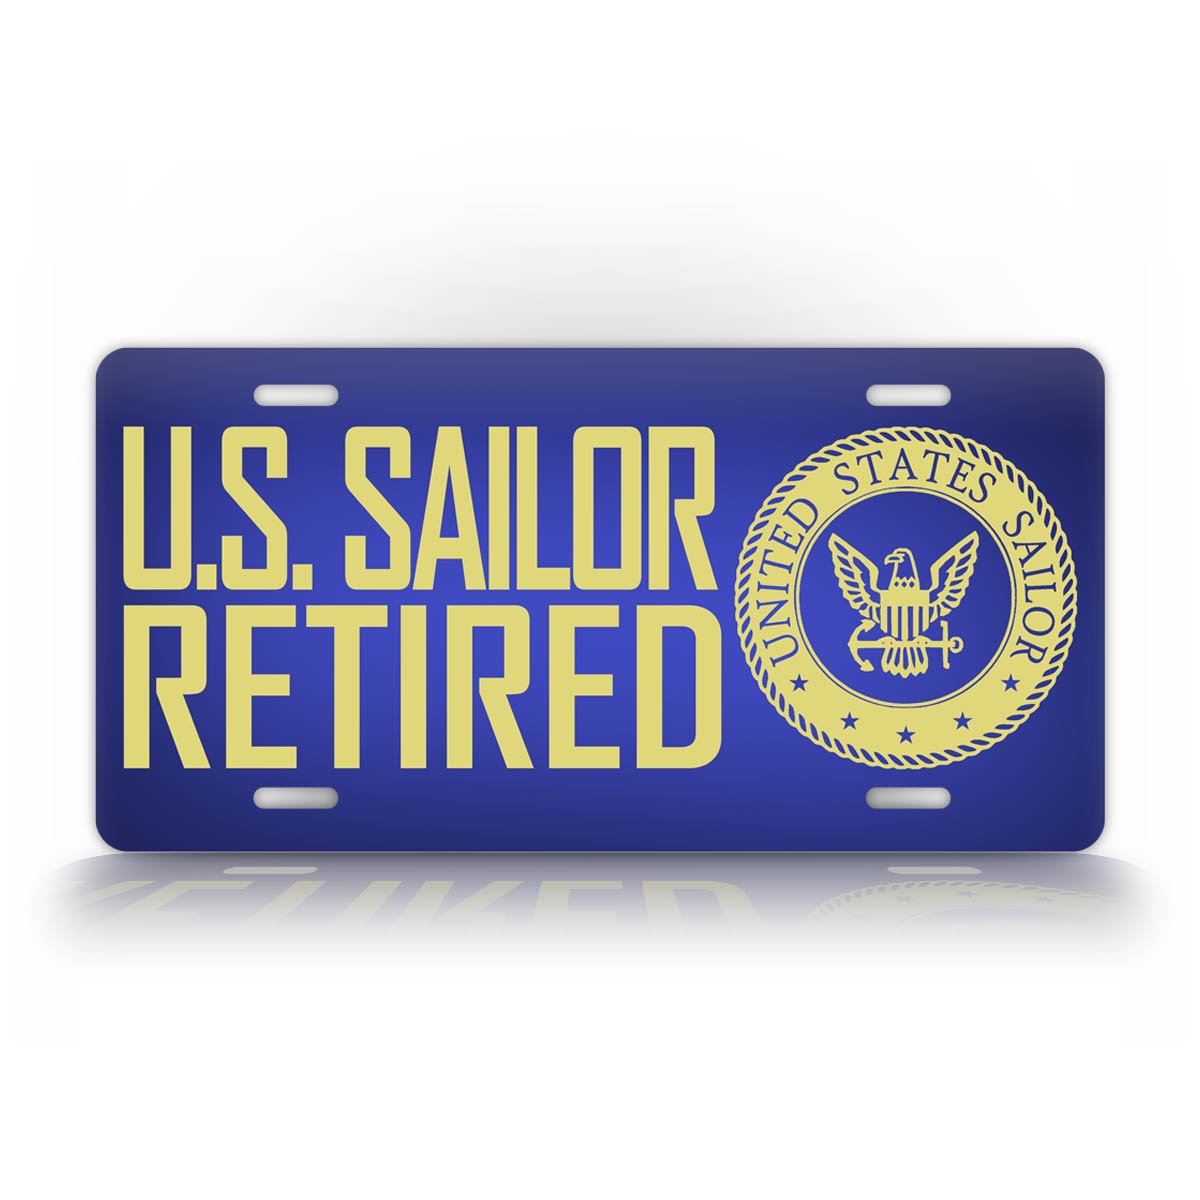 Retired United States Navy Veteran License Plate 